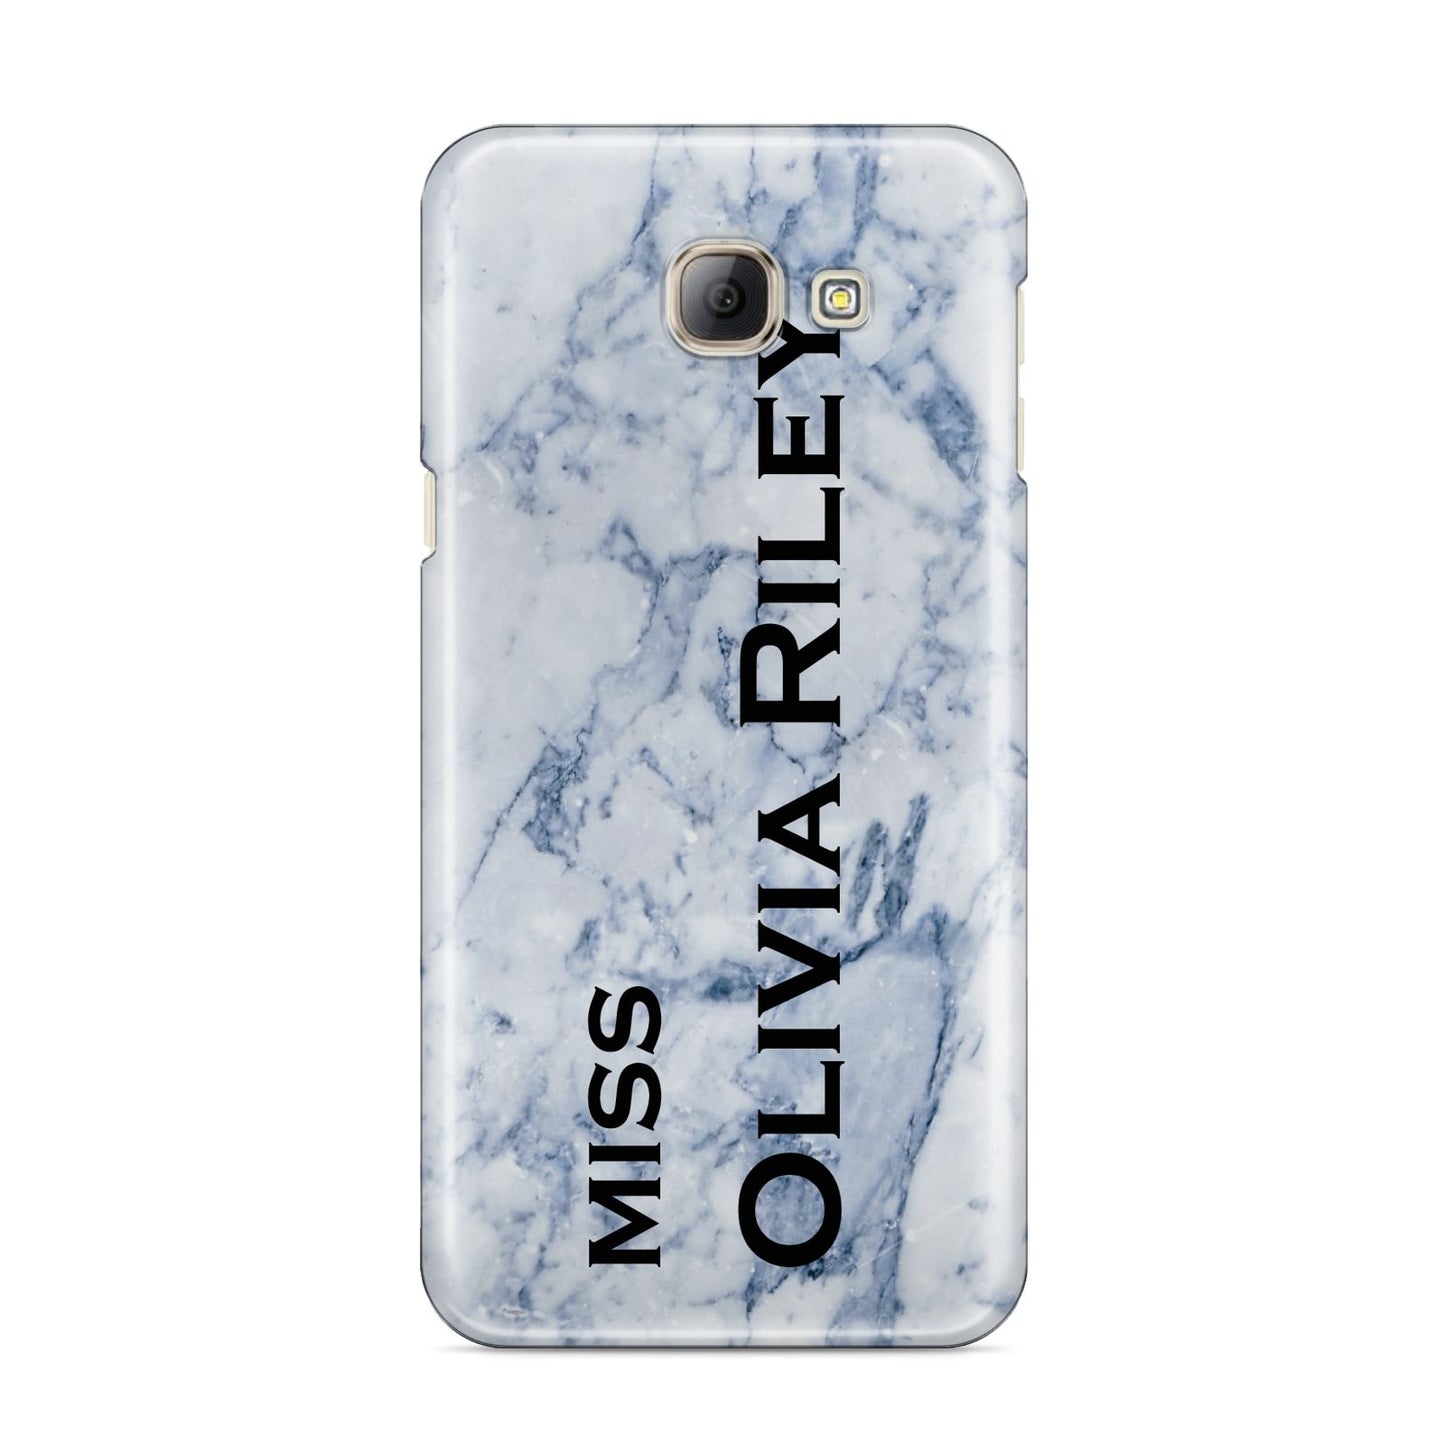 Full Name Grey Marble Samsung Galaxy A8 2016 Case